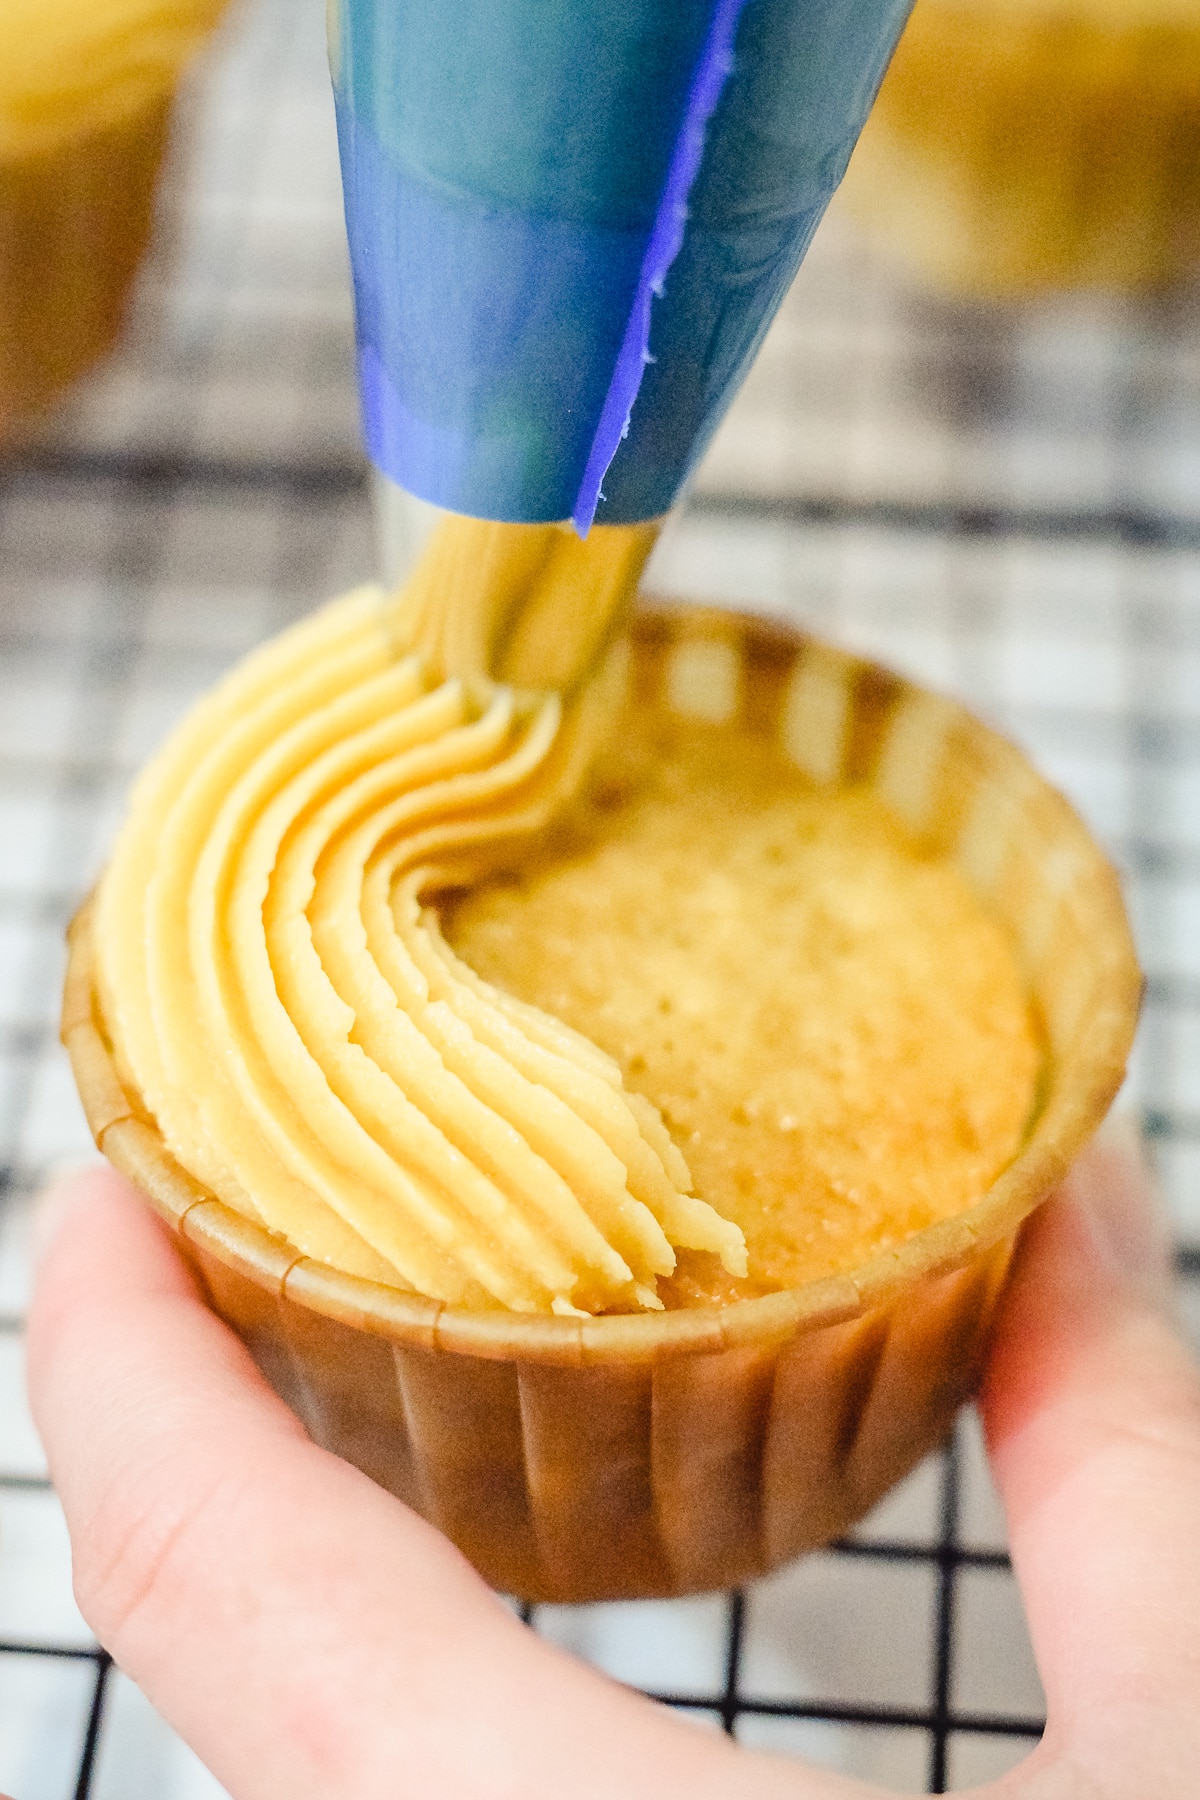 caramel buttercream being piped onto a brown sugar cupcake